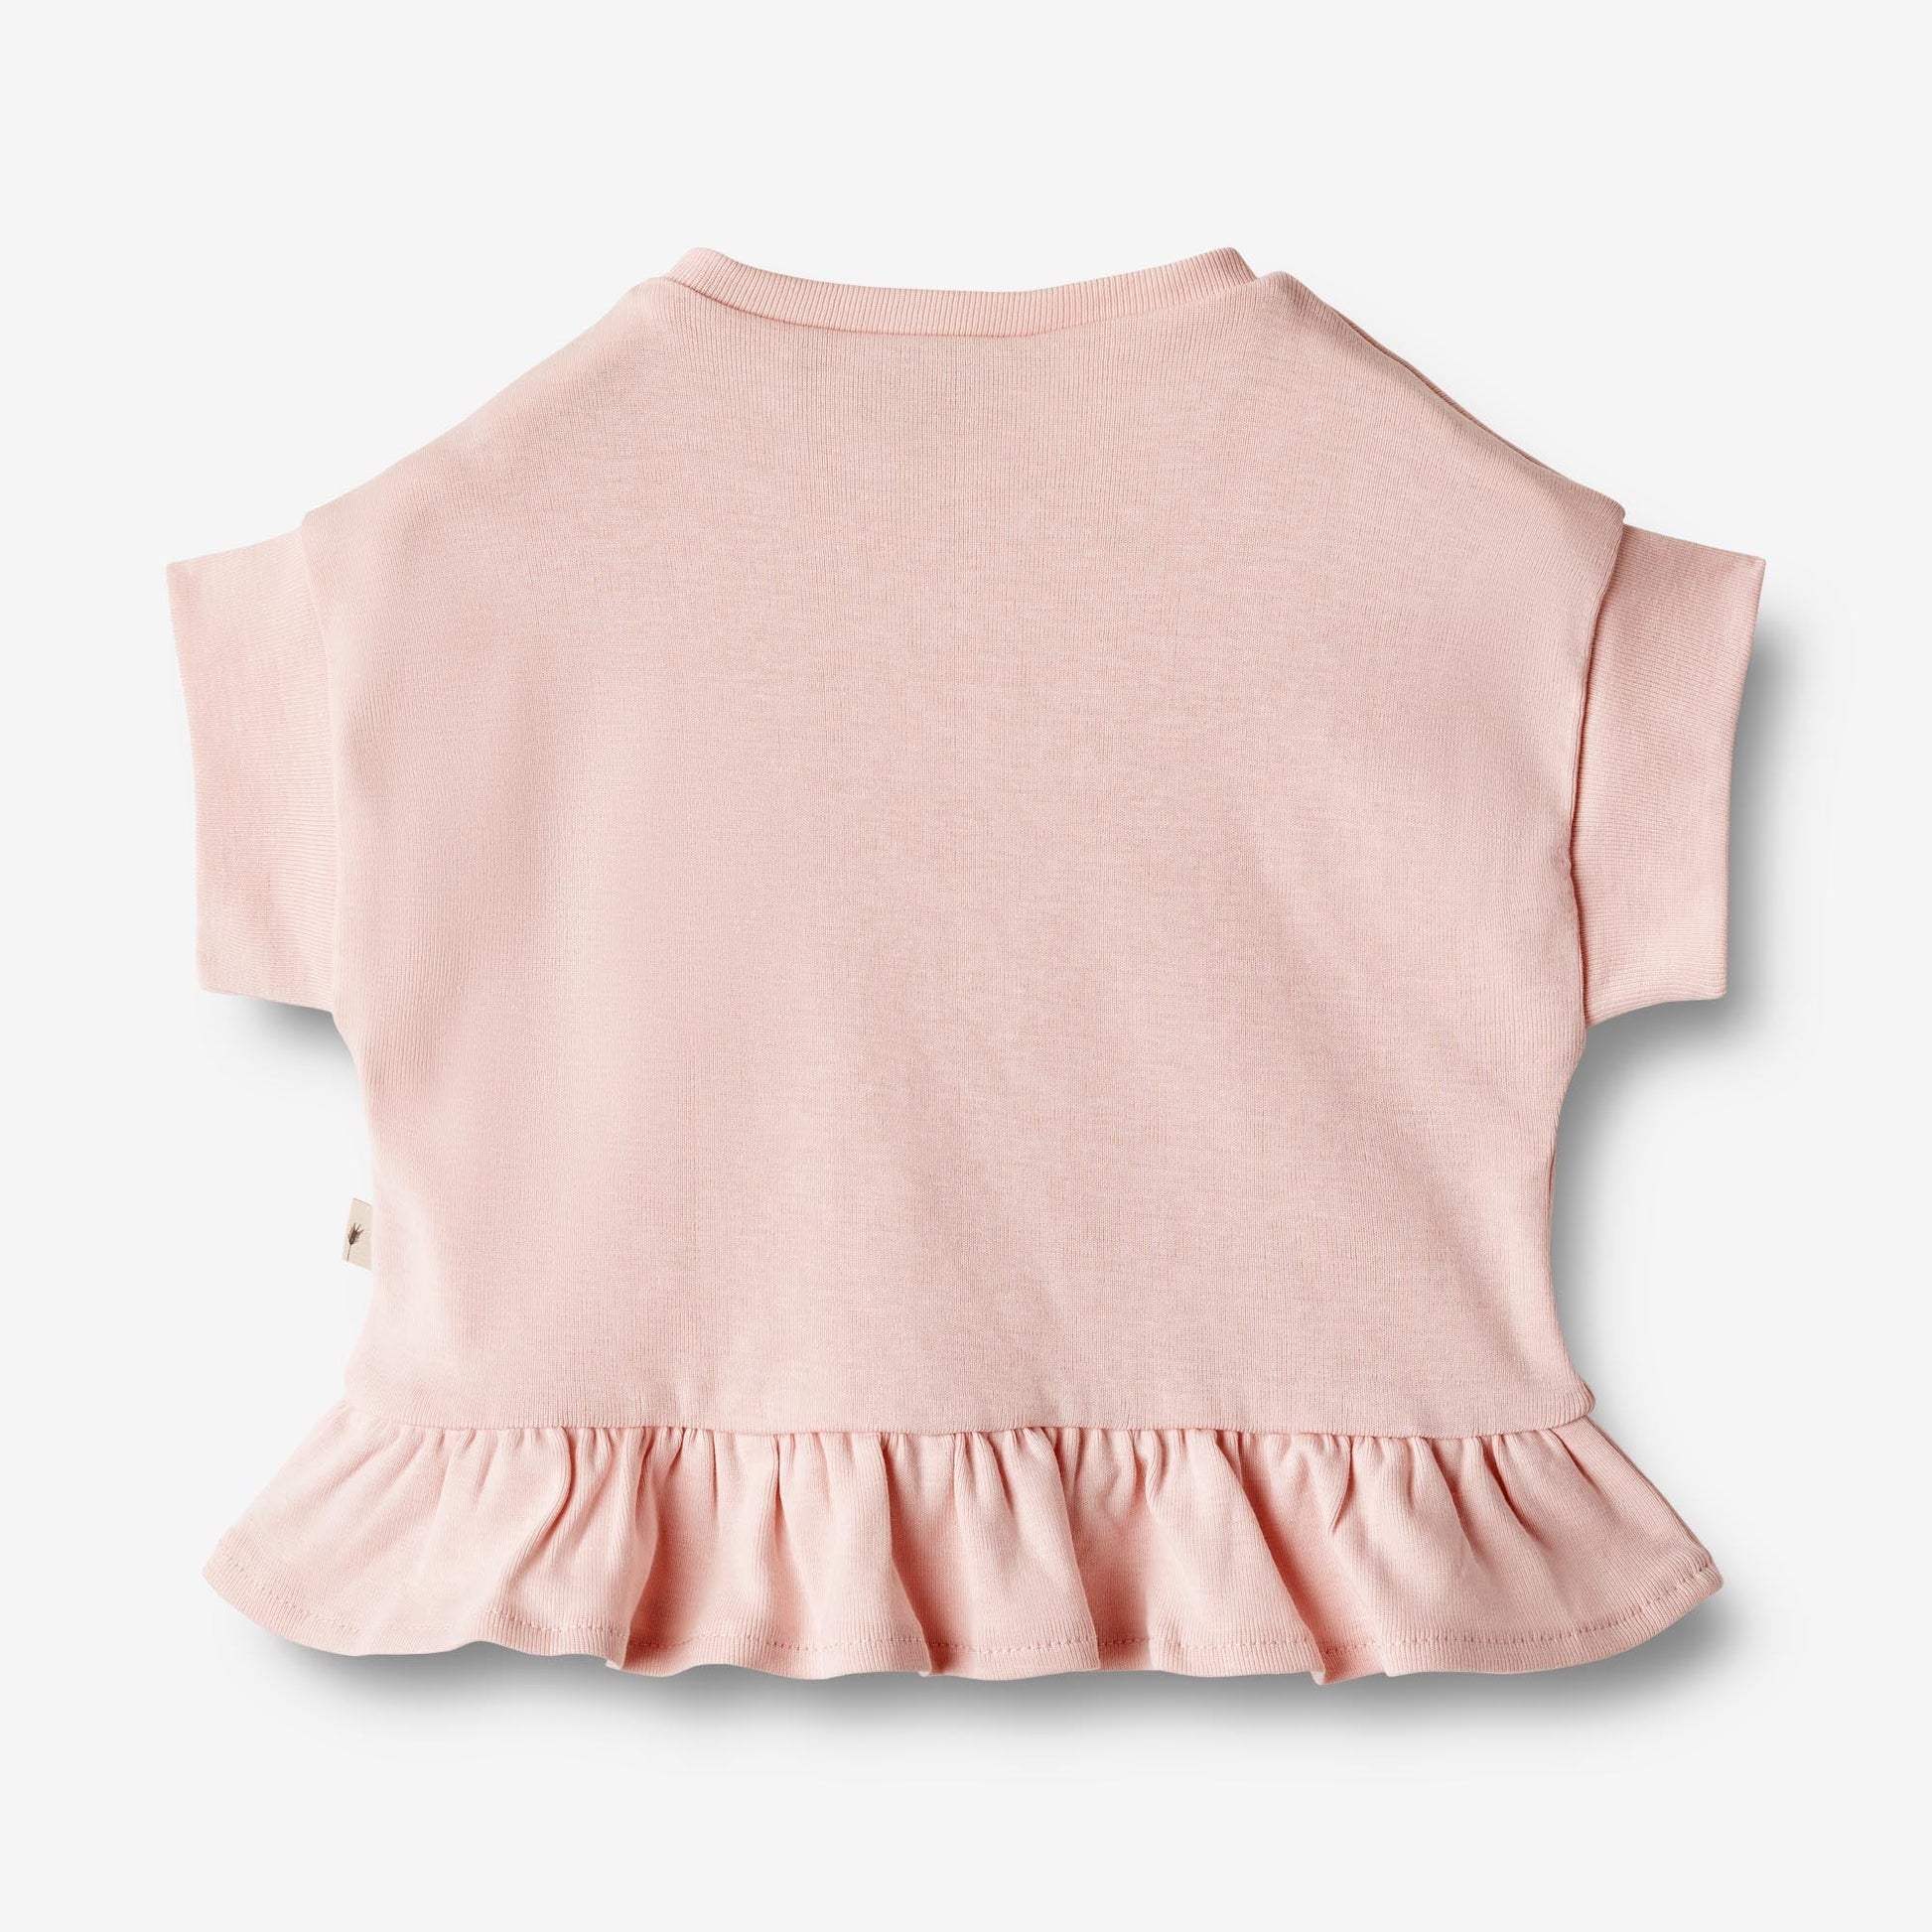 Wheat 'Lulu' S/S Baby T-Shirt - Rose Ballet